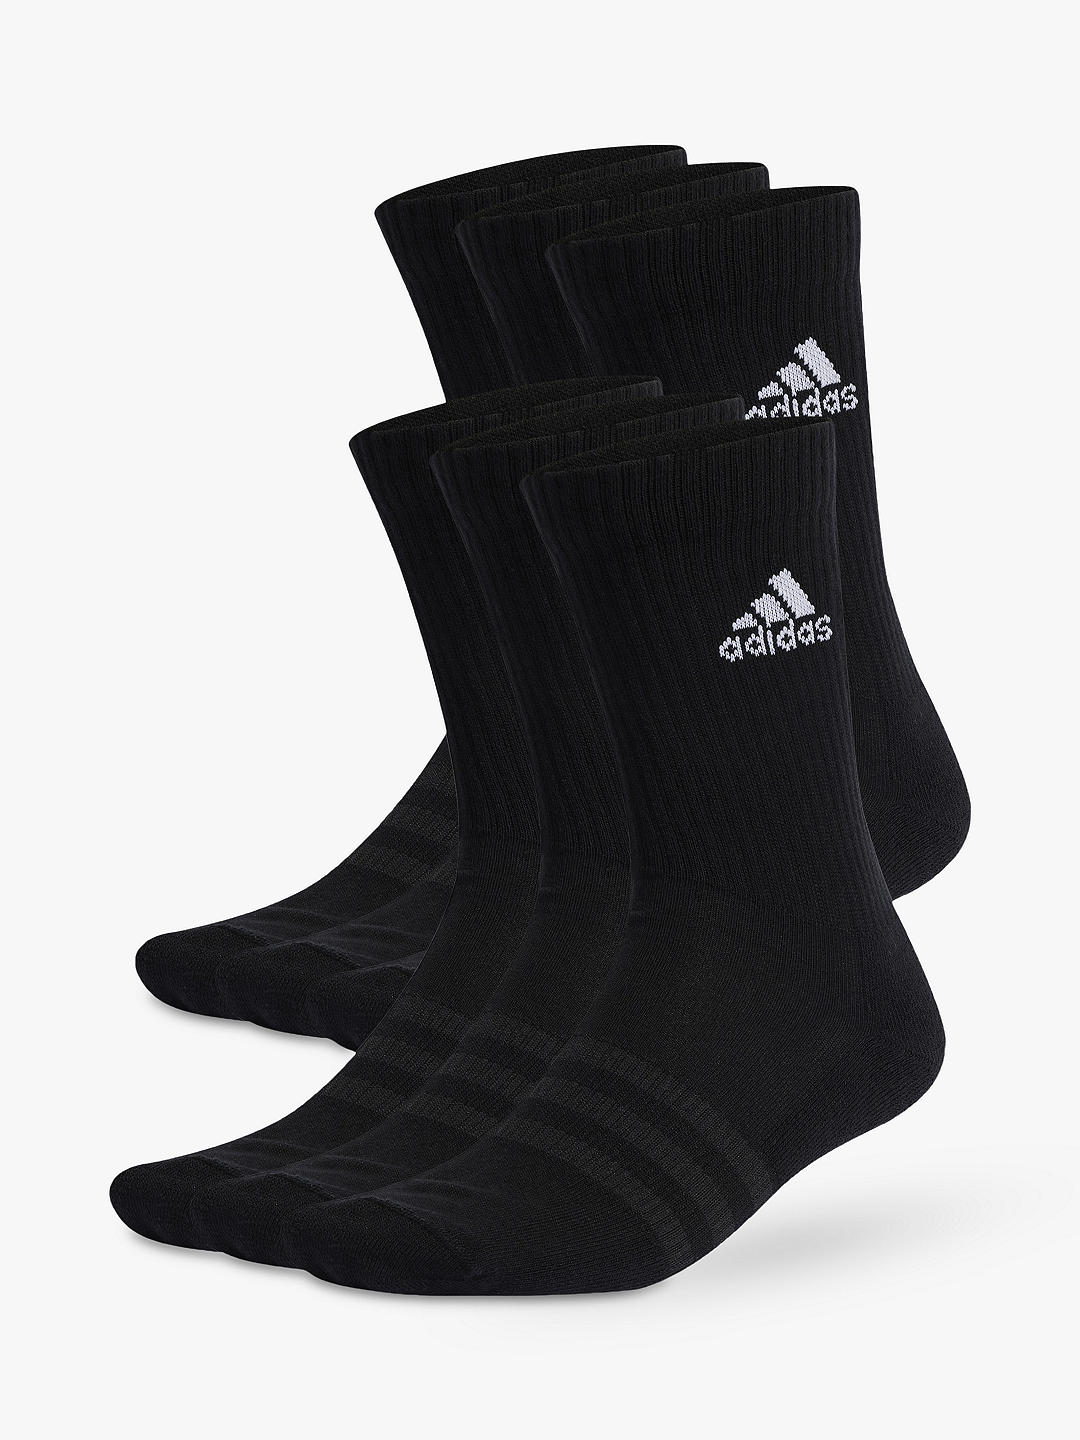 adidas Cushioned Crew Socks, Pack of 6 at John Lewis & Partners